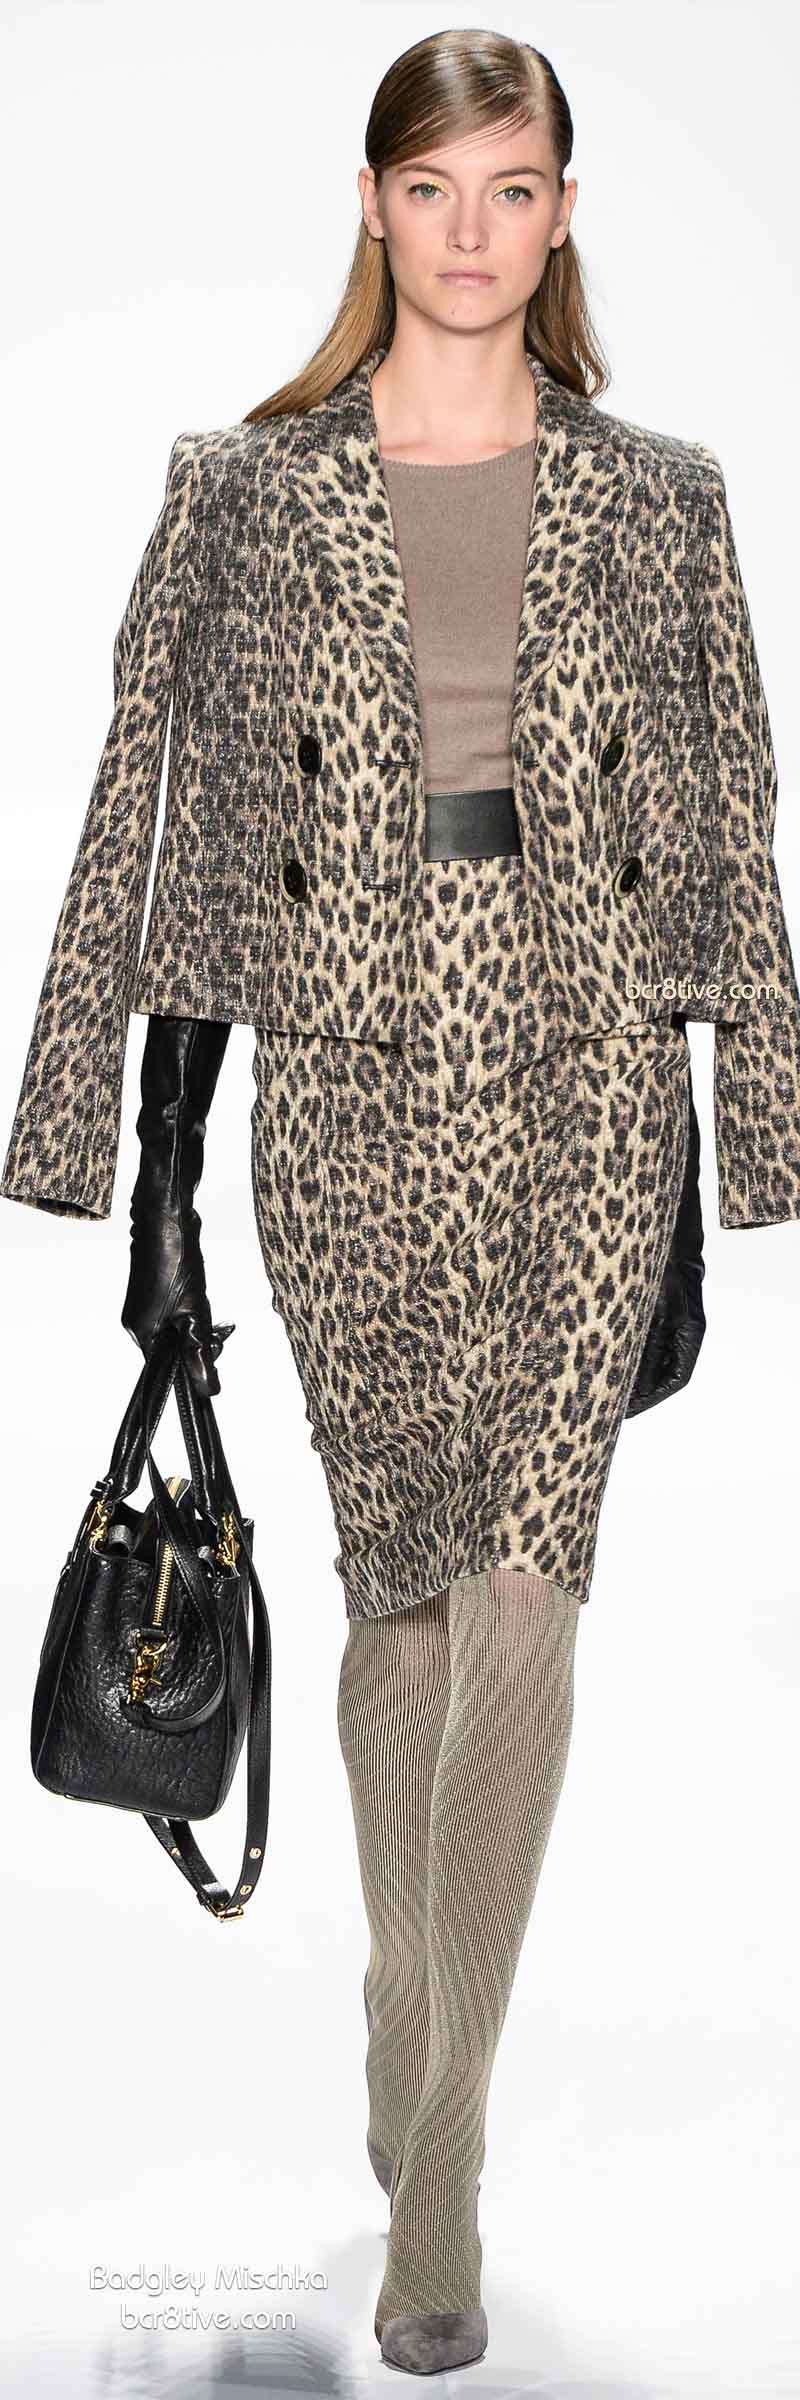 Fall 2014 Menswear Inspired Fashion - Badgley Mischka